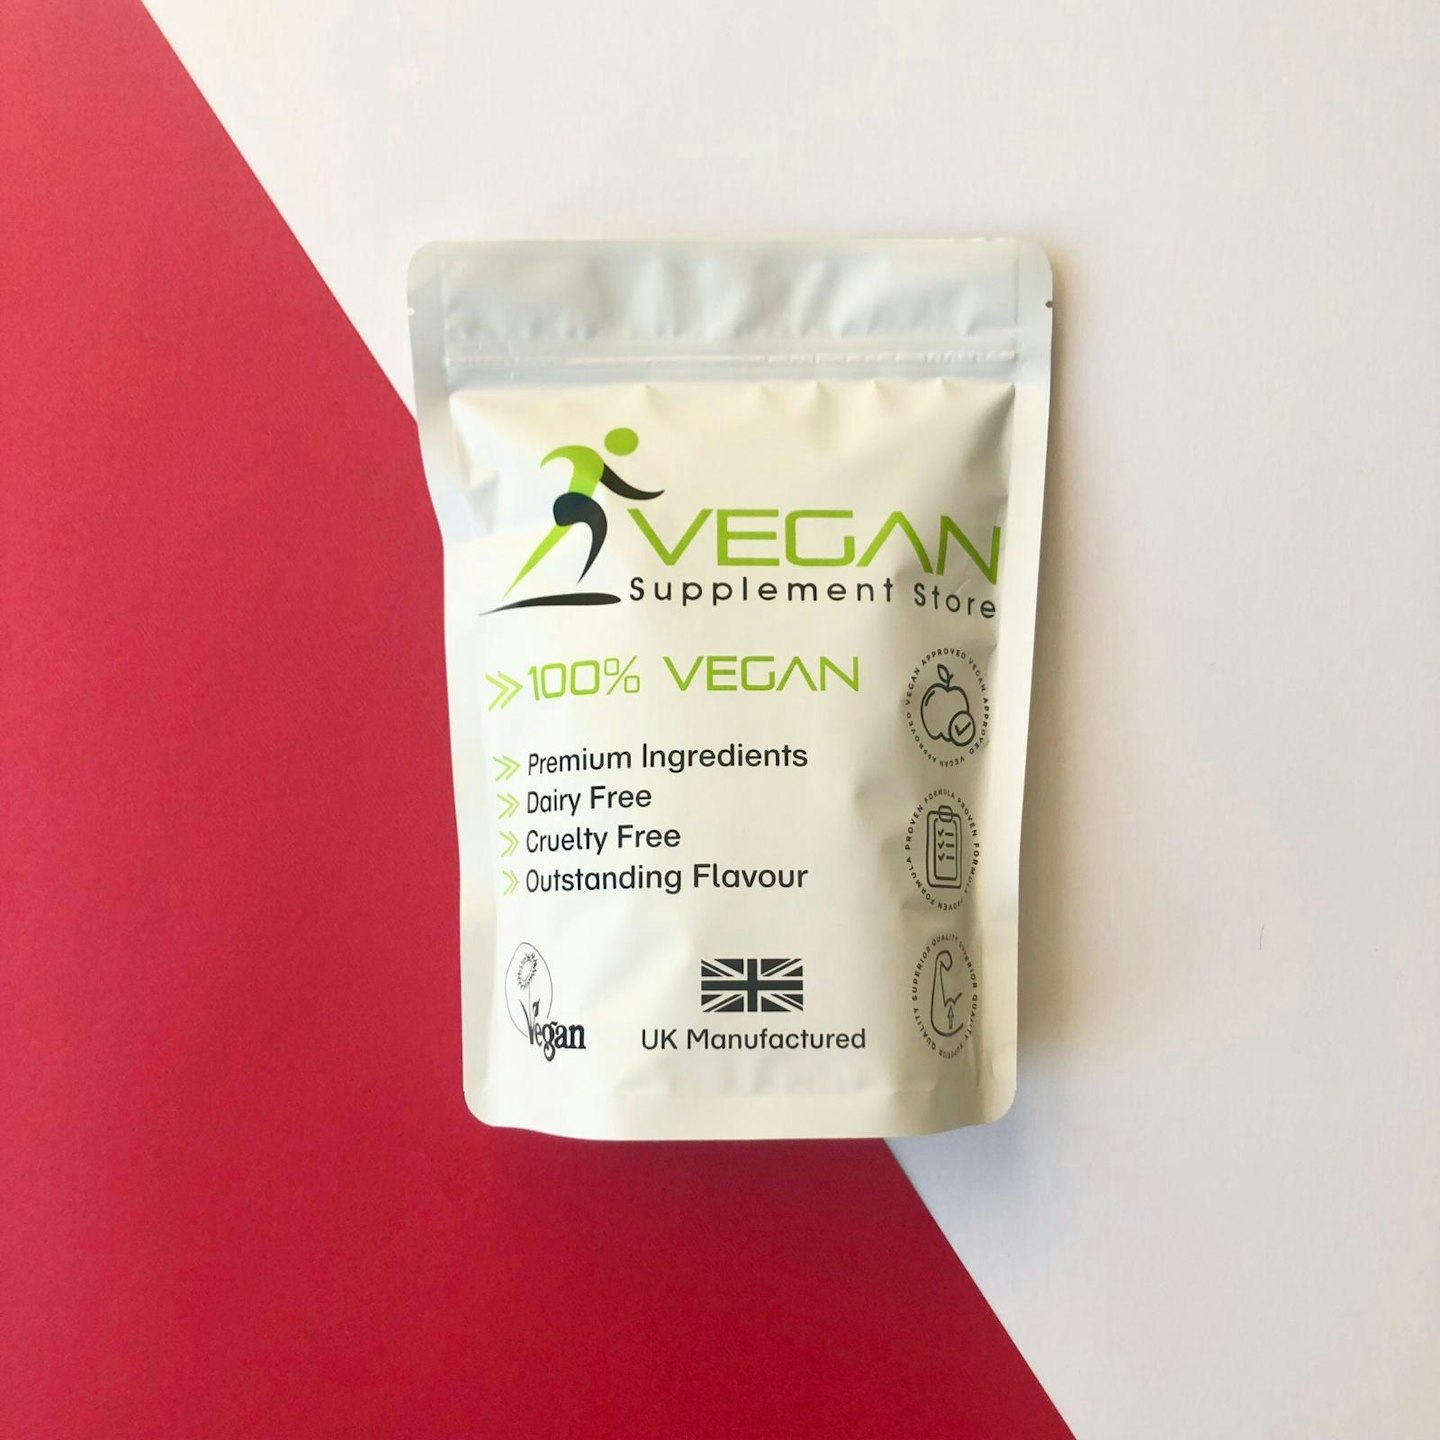 Vegan Supplement Store Vegan Pre-Workout